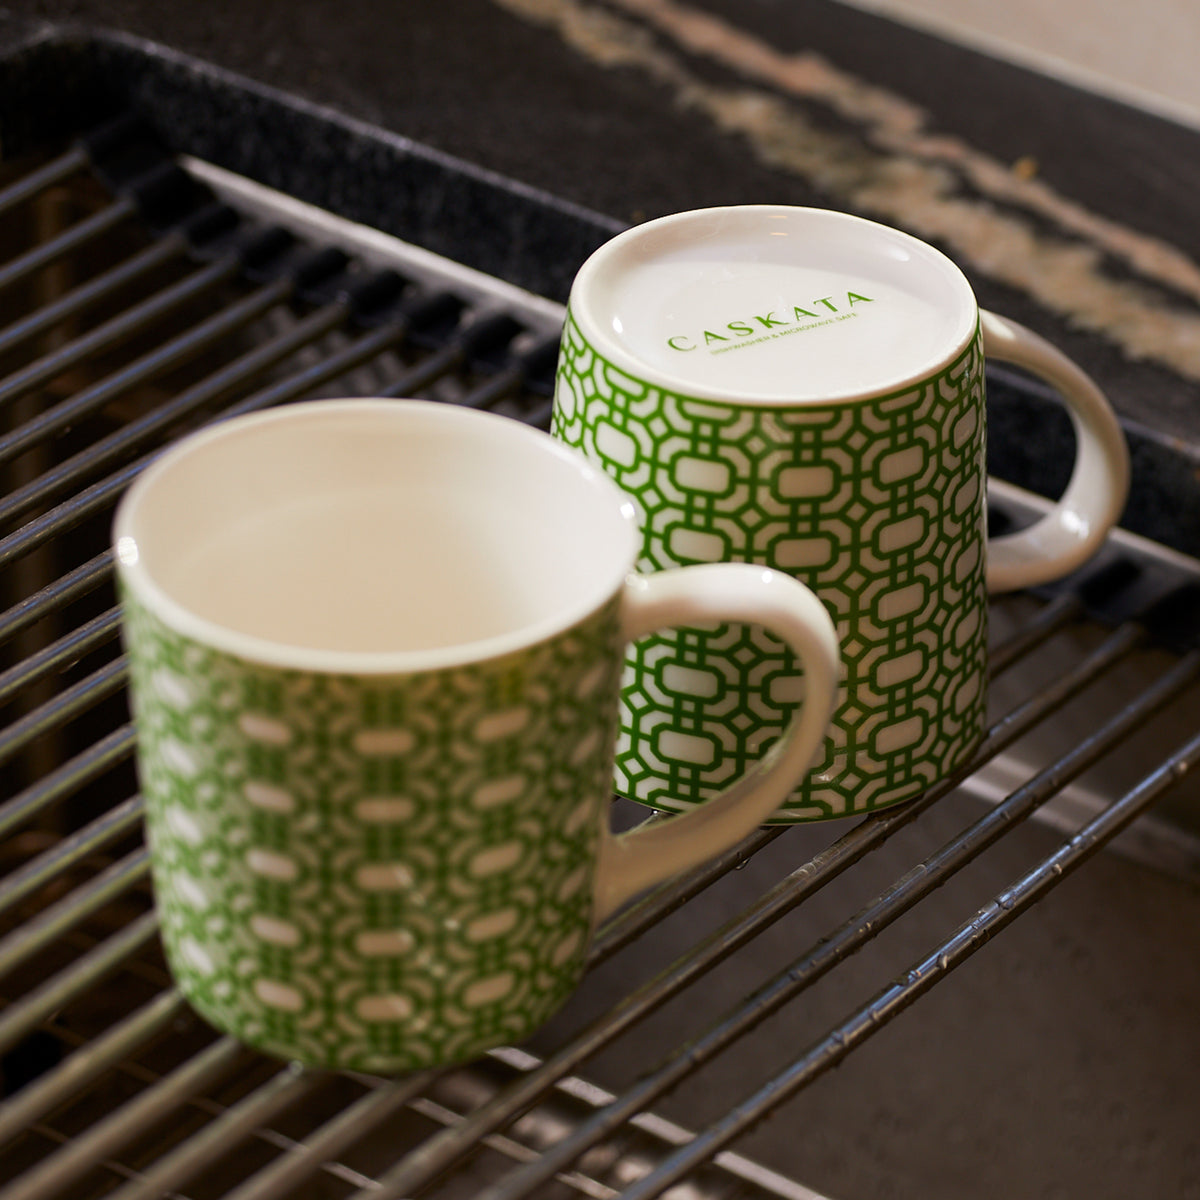 Two Newport Garden Gate green and white mugs sitting on a rack. Brand: Caskata Artisanal Home.